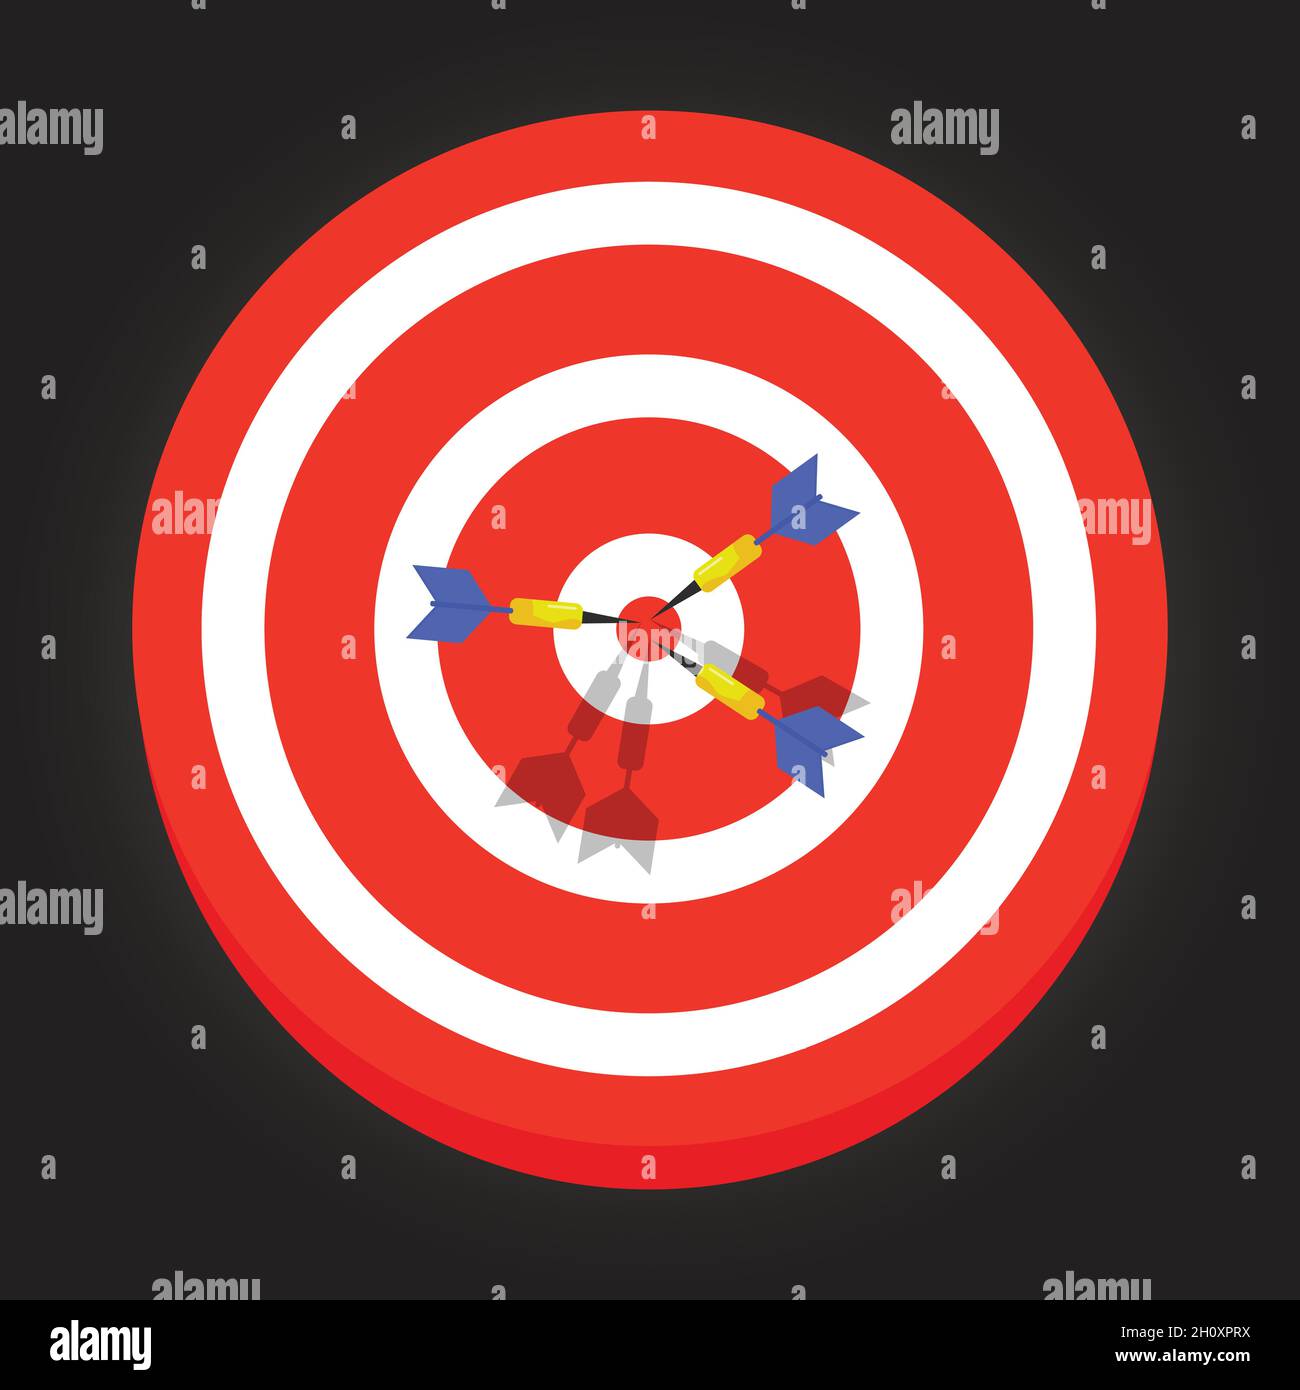 Dart board with 3 arrows hitting bullseye Stock Vector